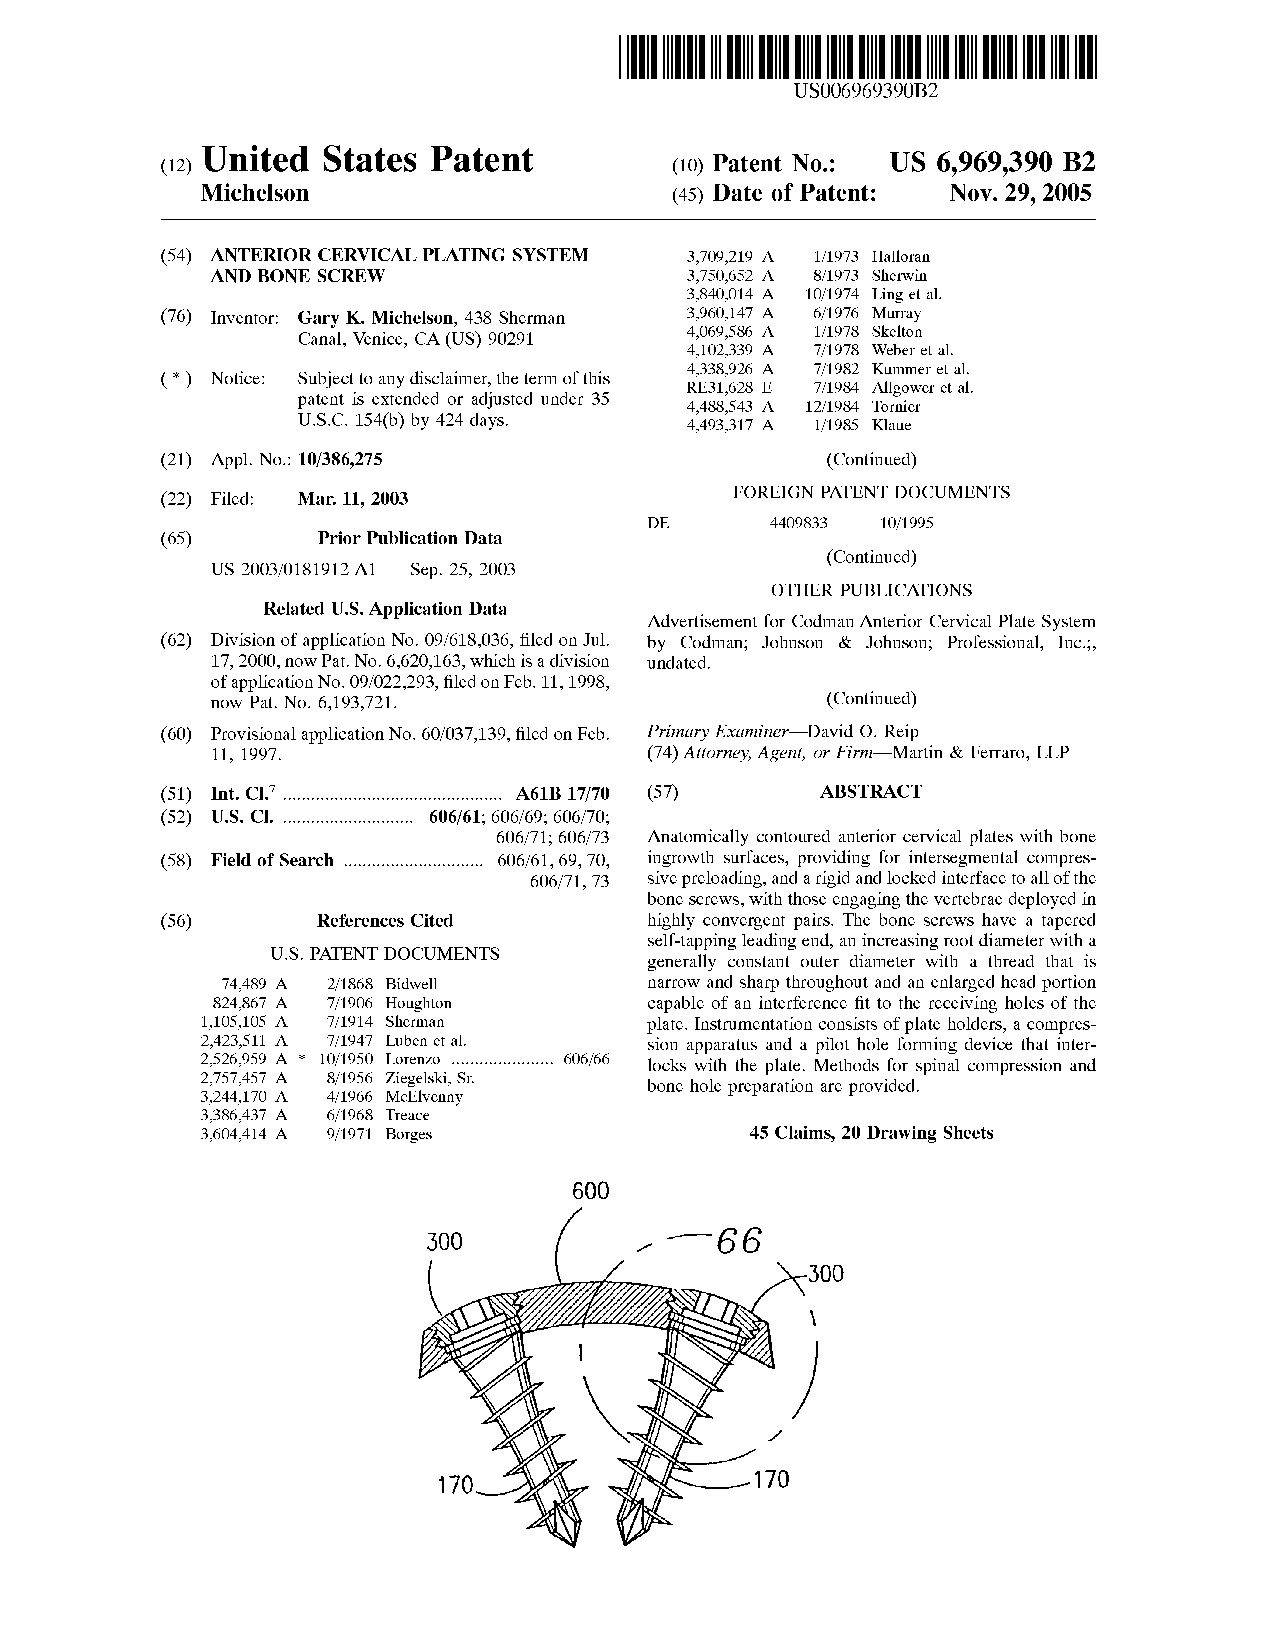 Anterior cervical plating system and bone screw - Patent 6,969,390